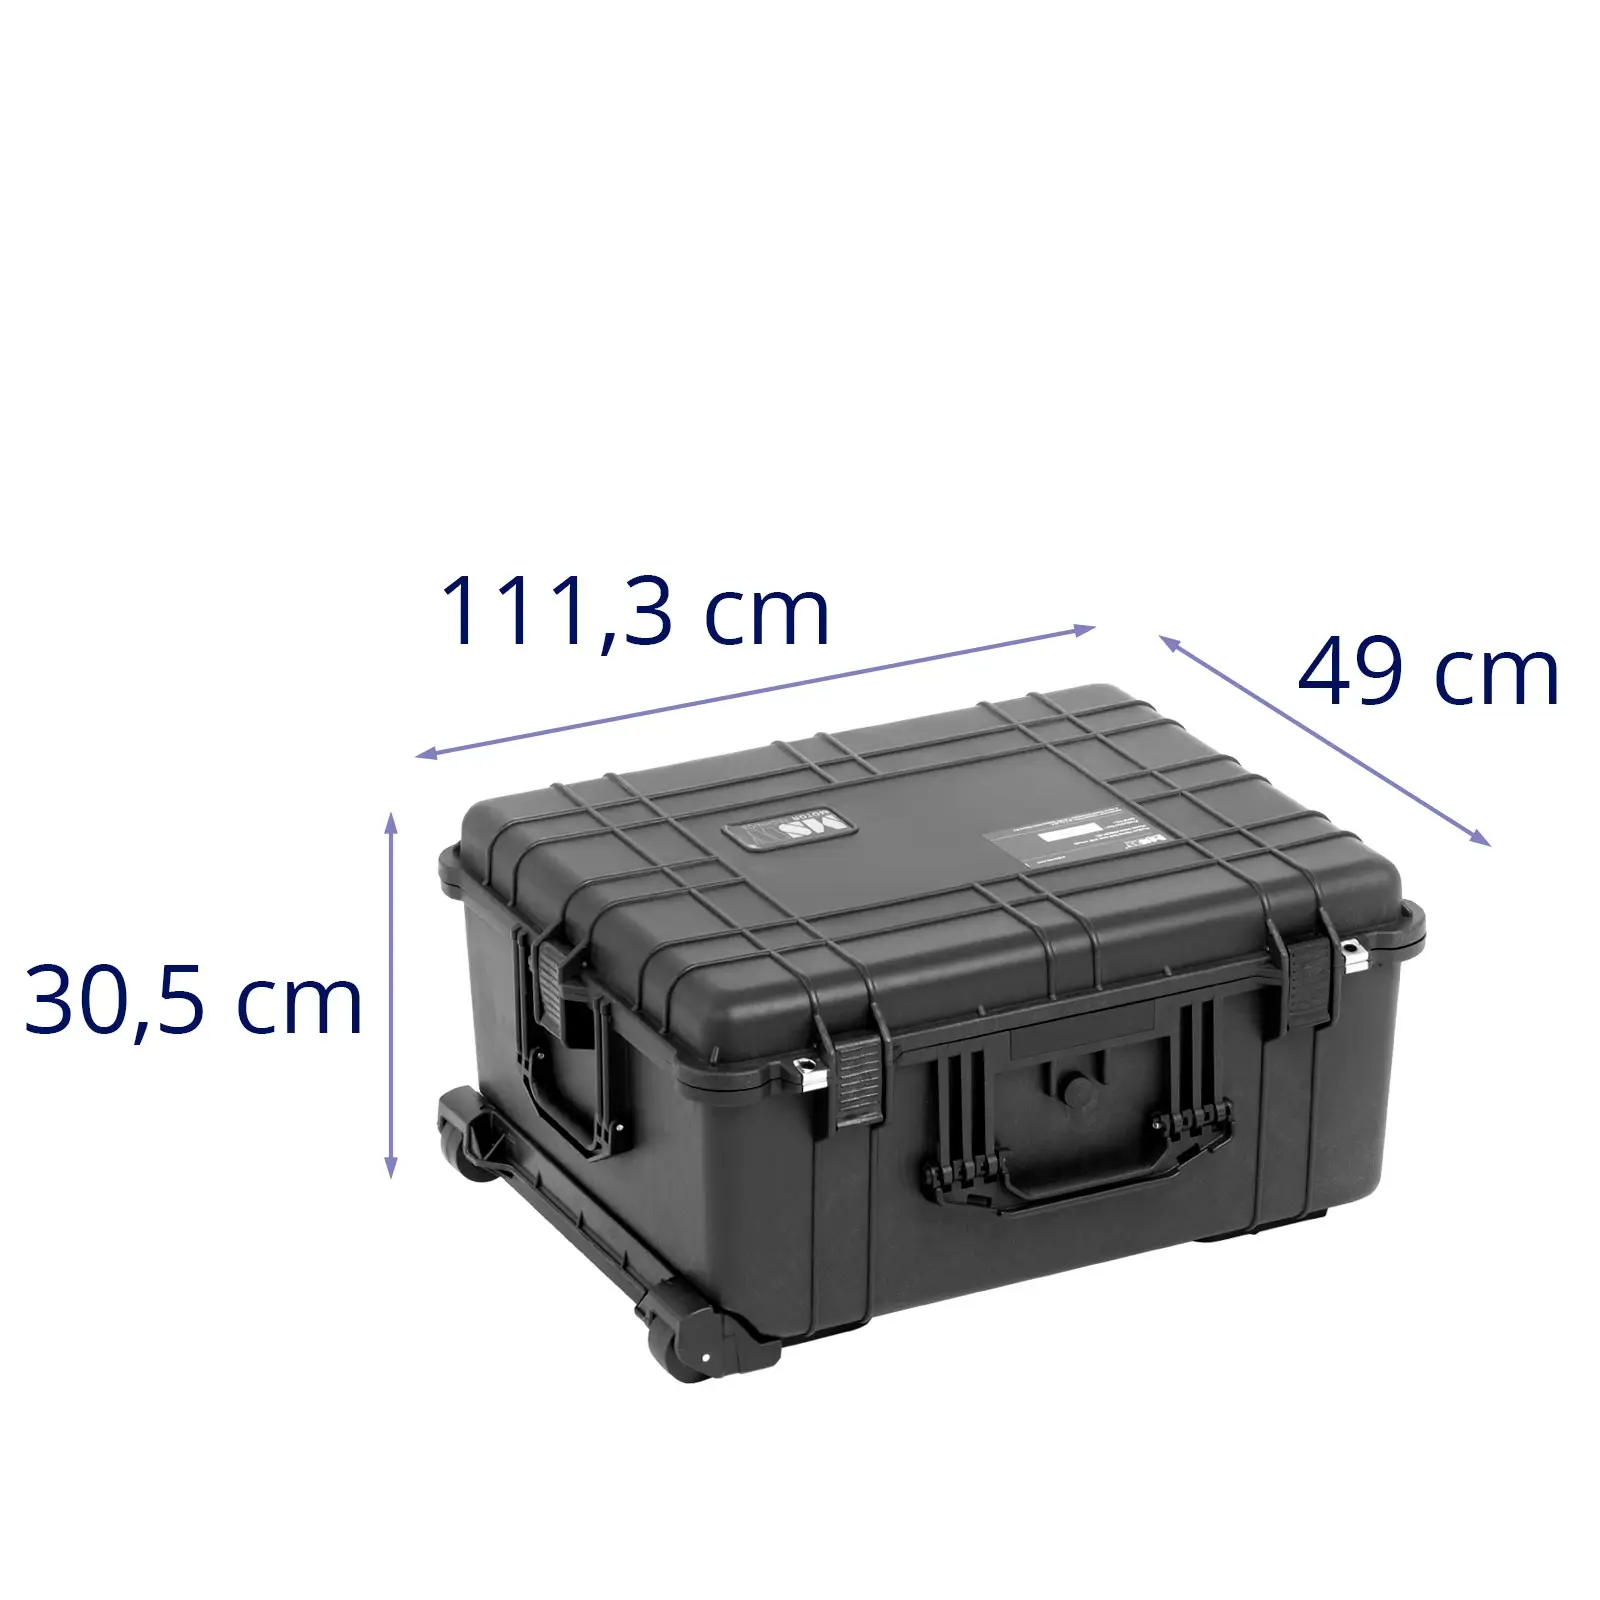 Caja de herramientas con ruedas - impermeable - 62,5 x 50 x 30,5 cm - asa telescópica